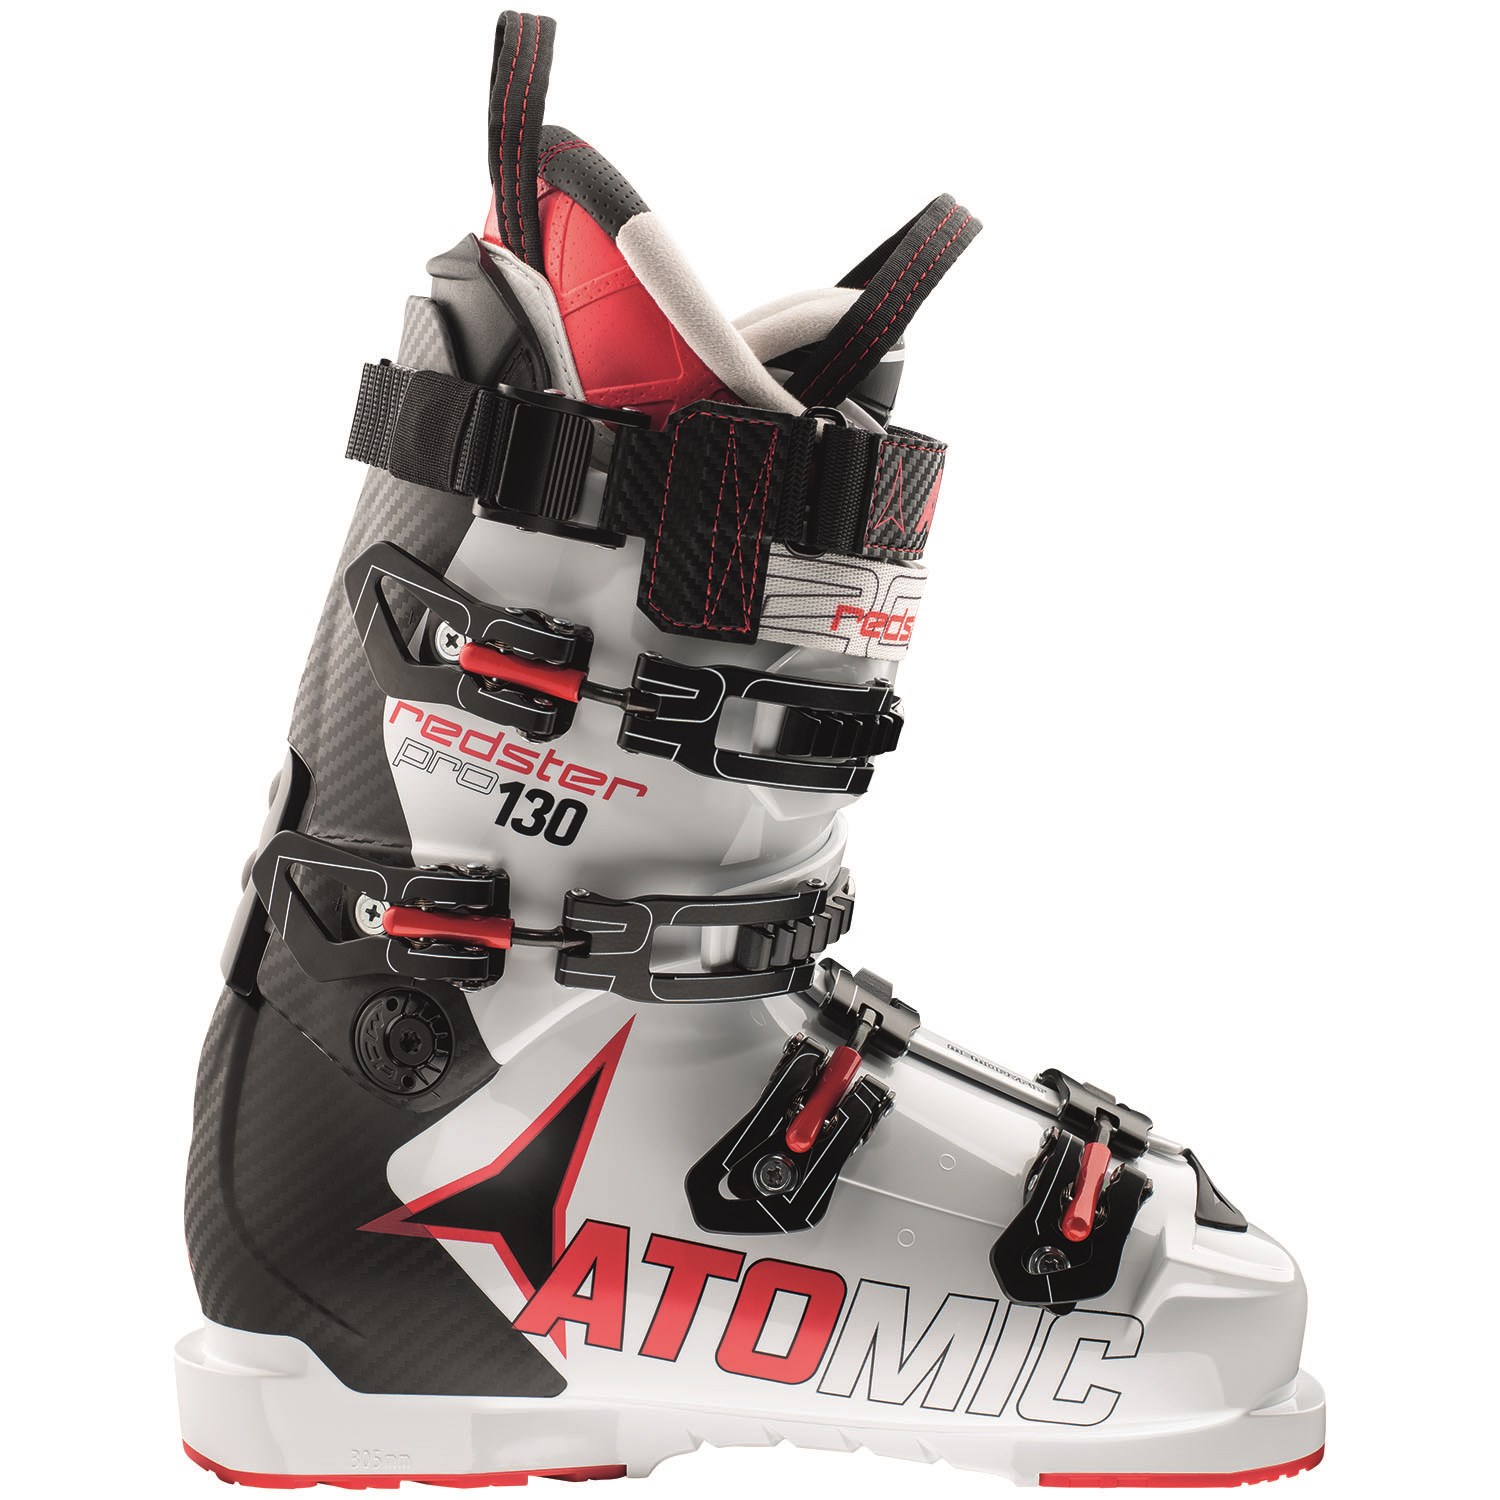 Atomic Redster Pro 130 Ski Boots 2016 | evo